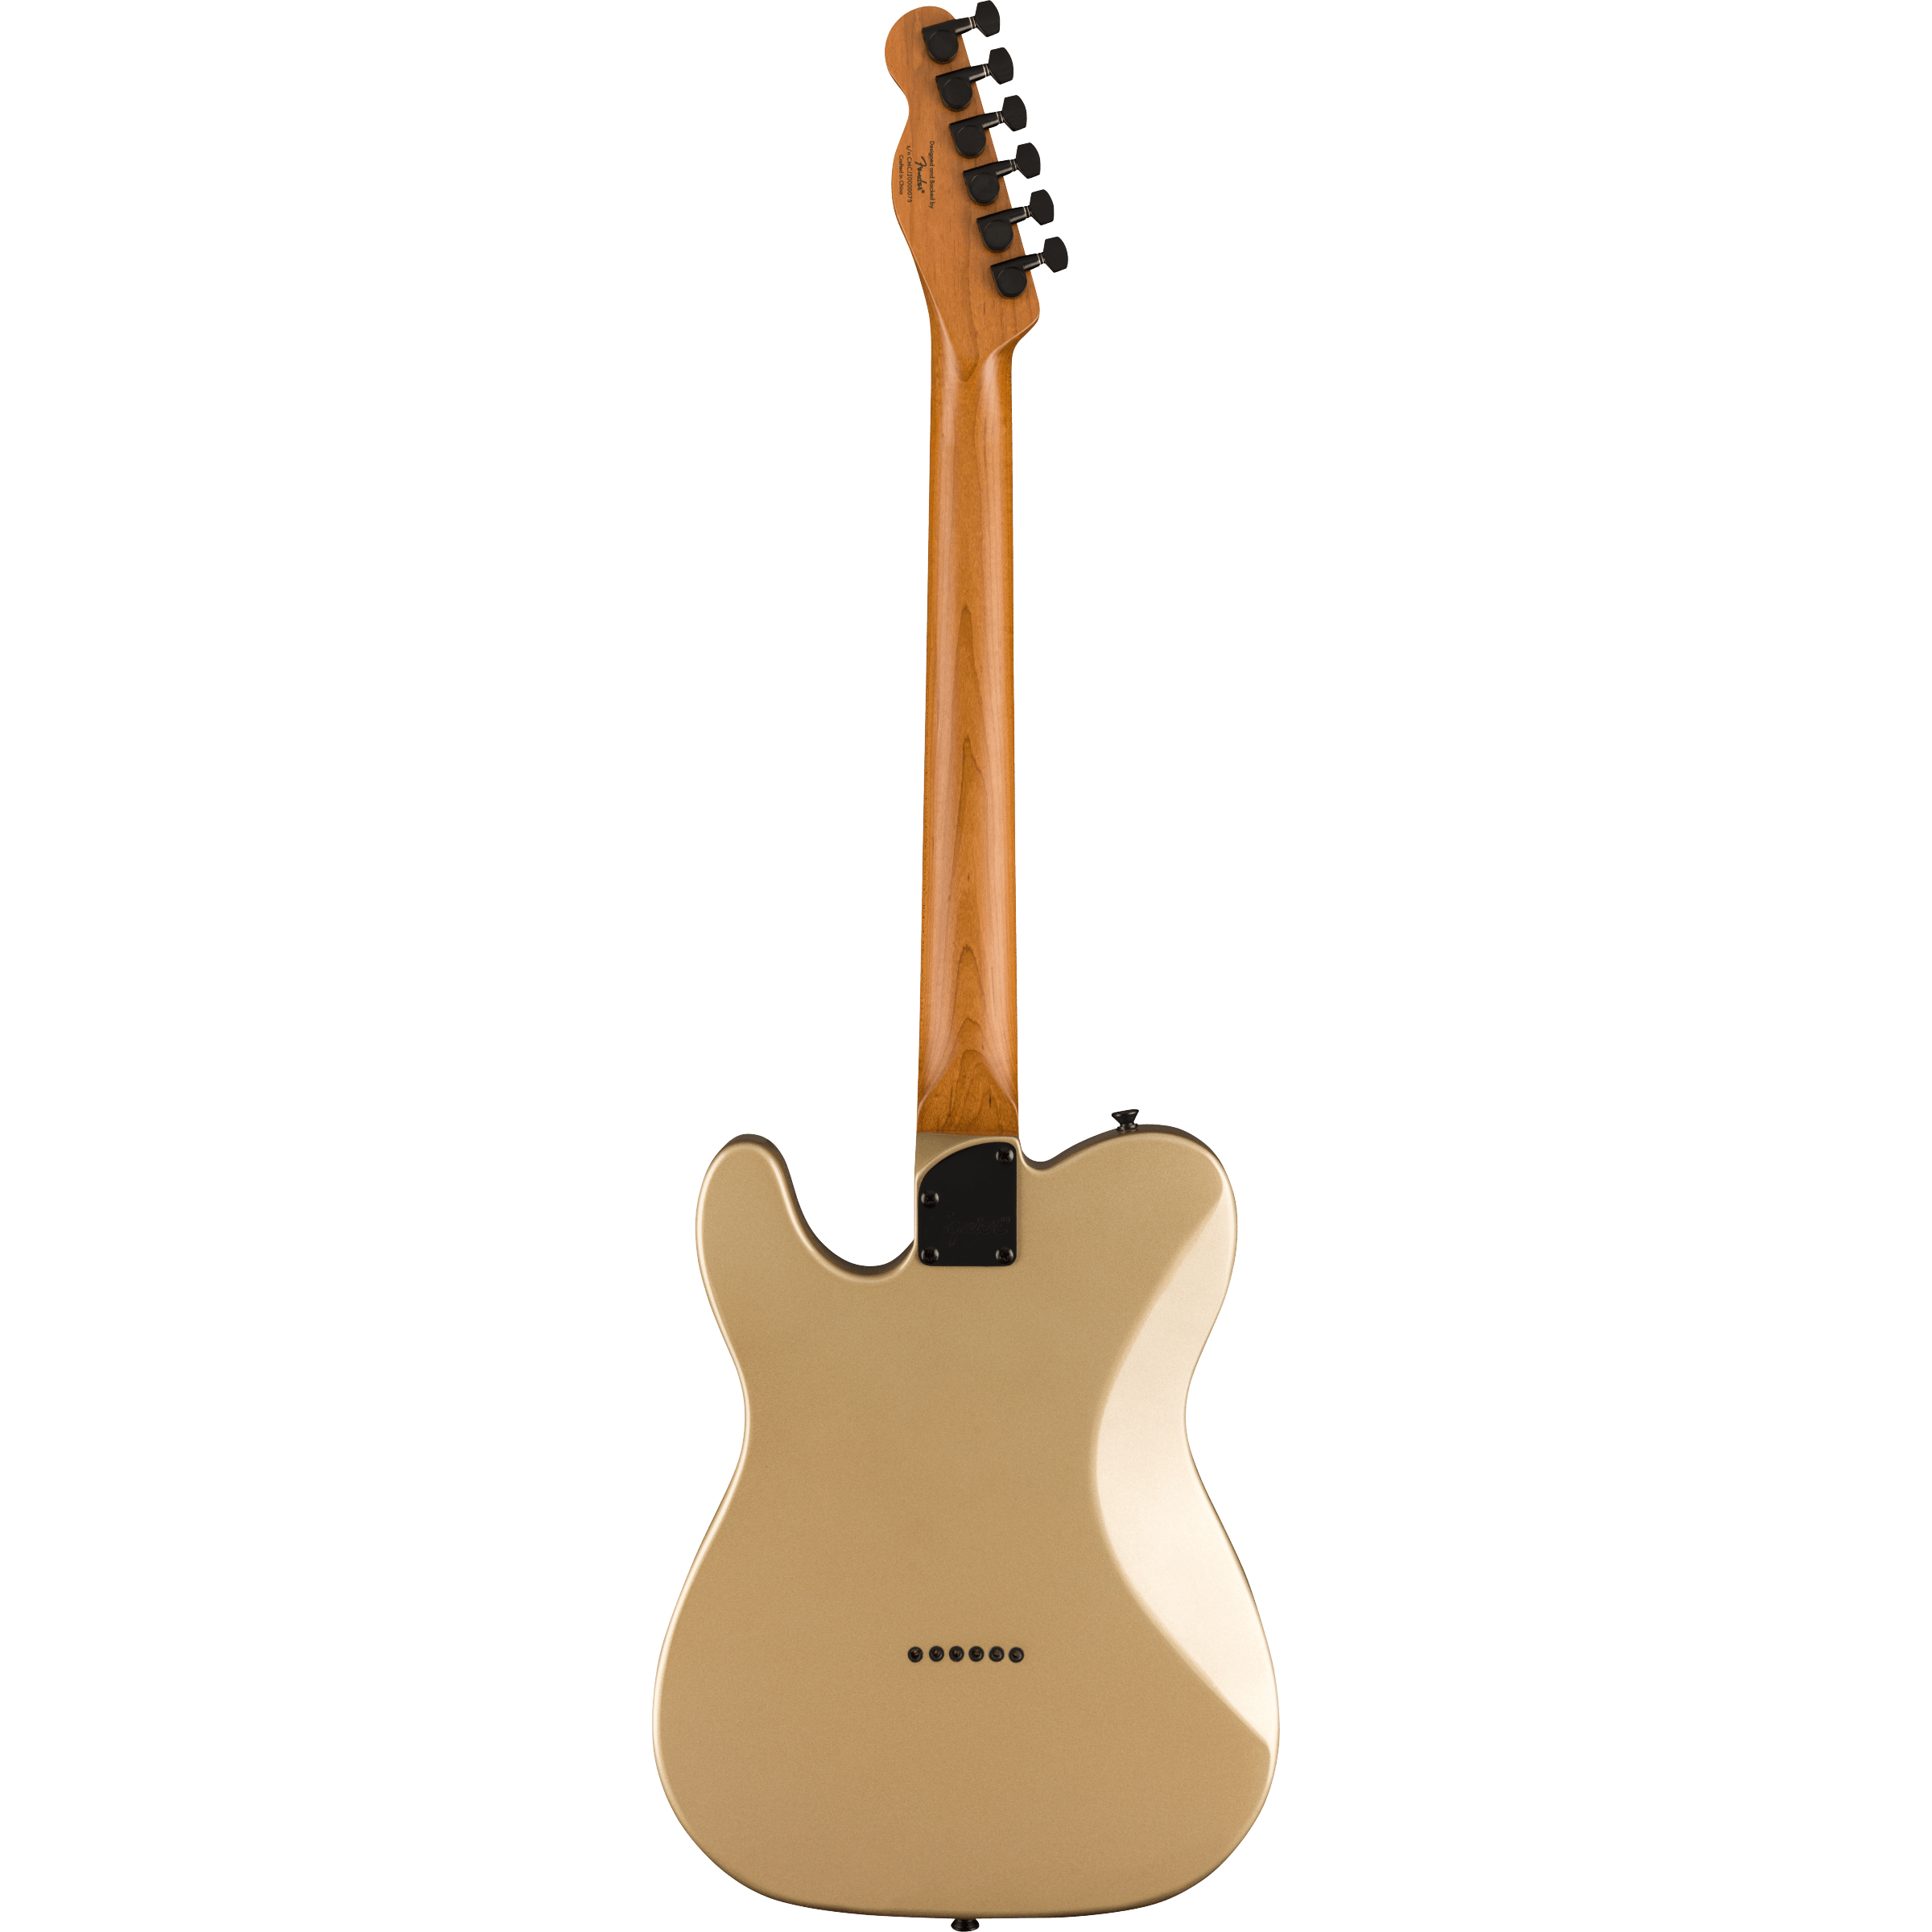 Fender Squier Contemporary Telecaster® RH, Roasted Maple Fingerboard, Shoreline Gold